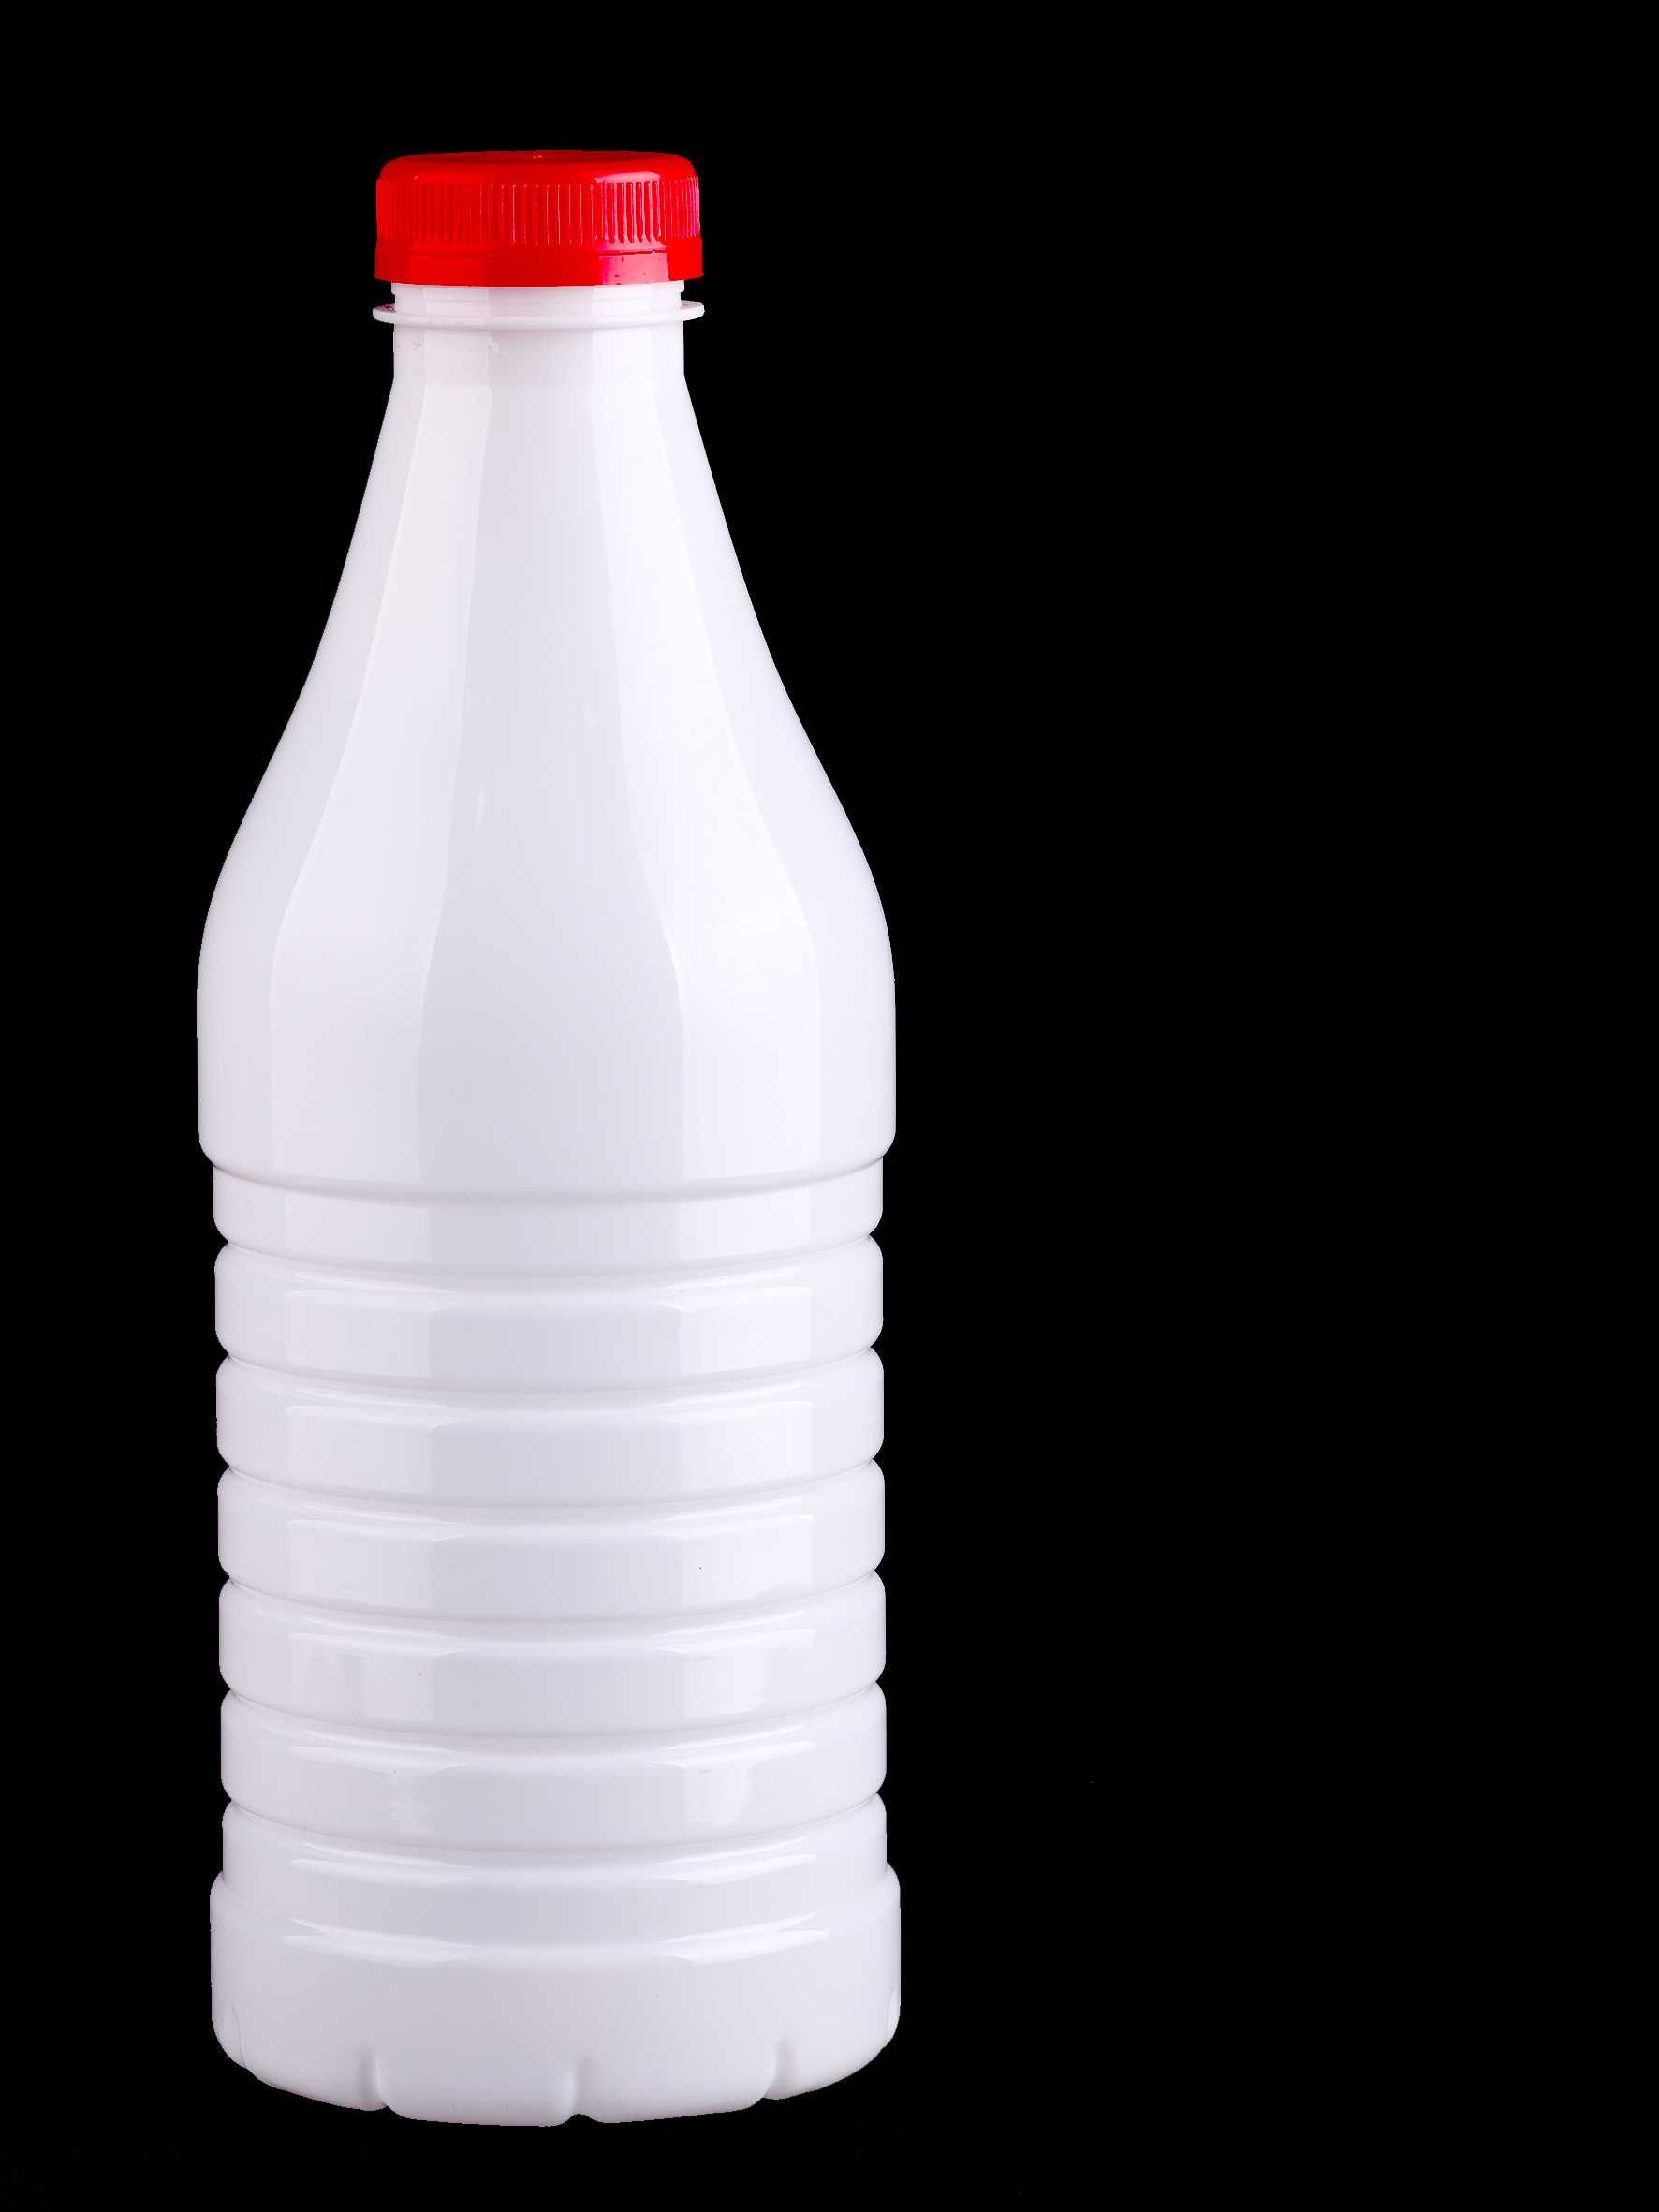 Бутылки баклашки от производителя по низком ценам